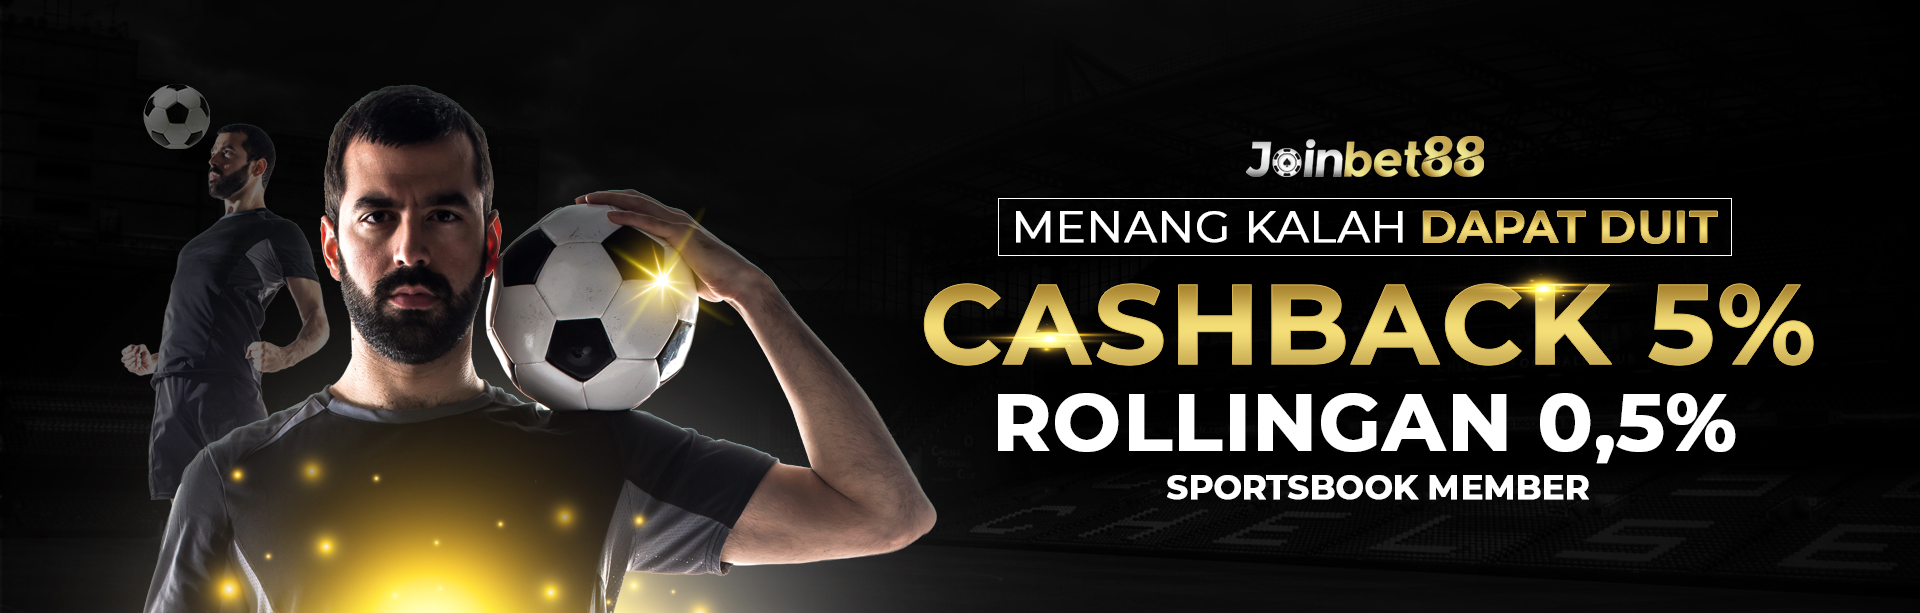 Sportsbook Cashback + Rollingan